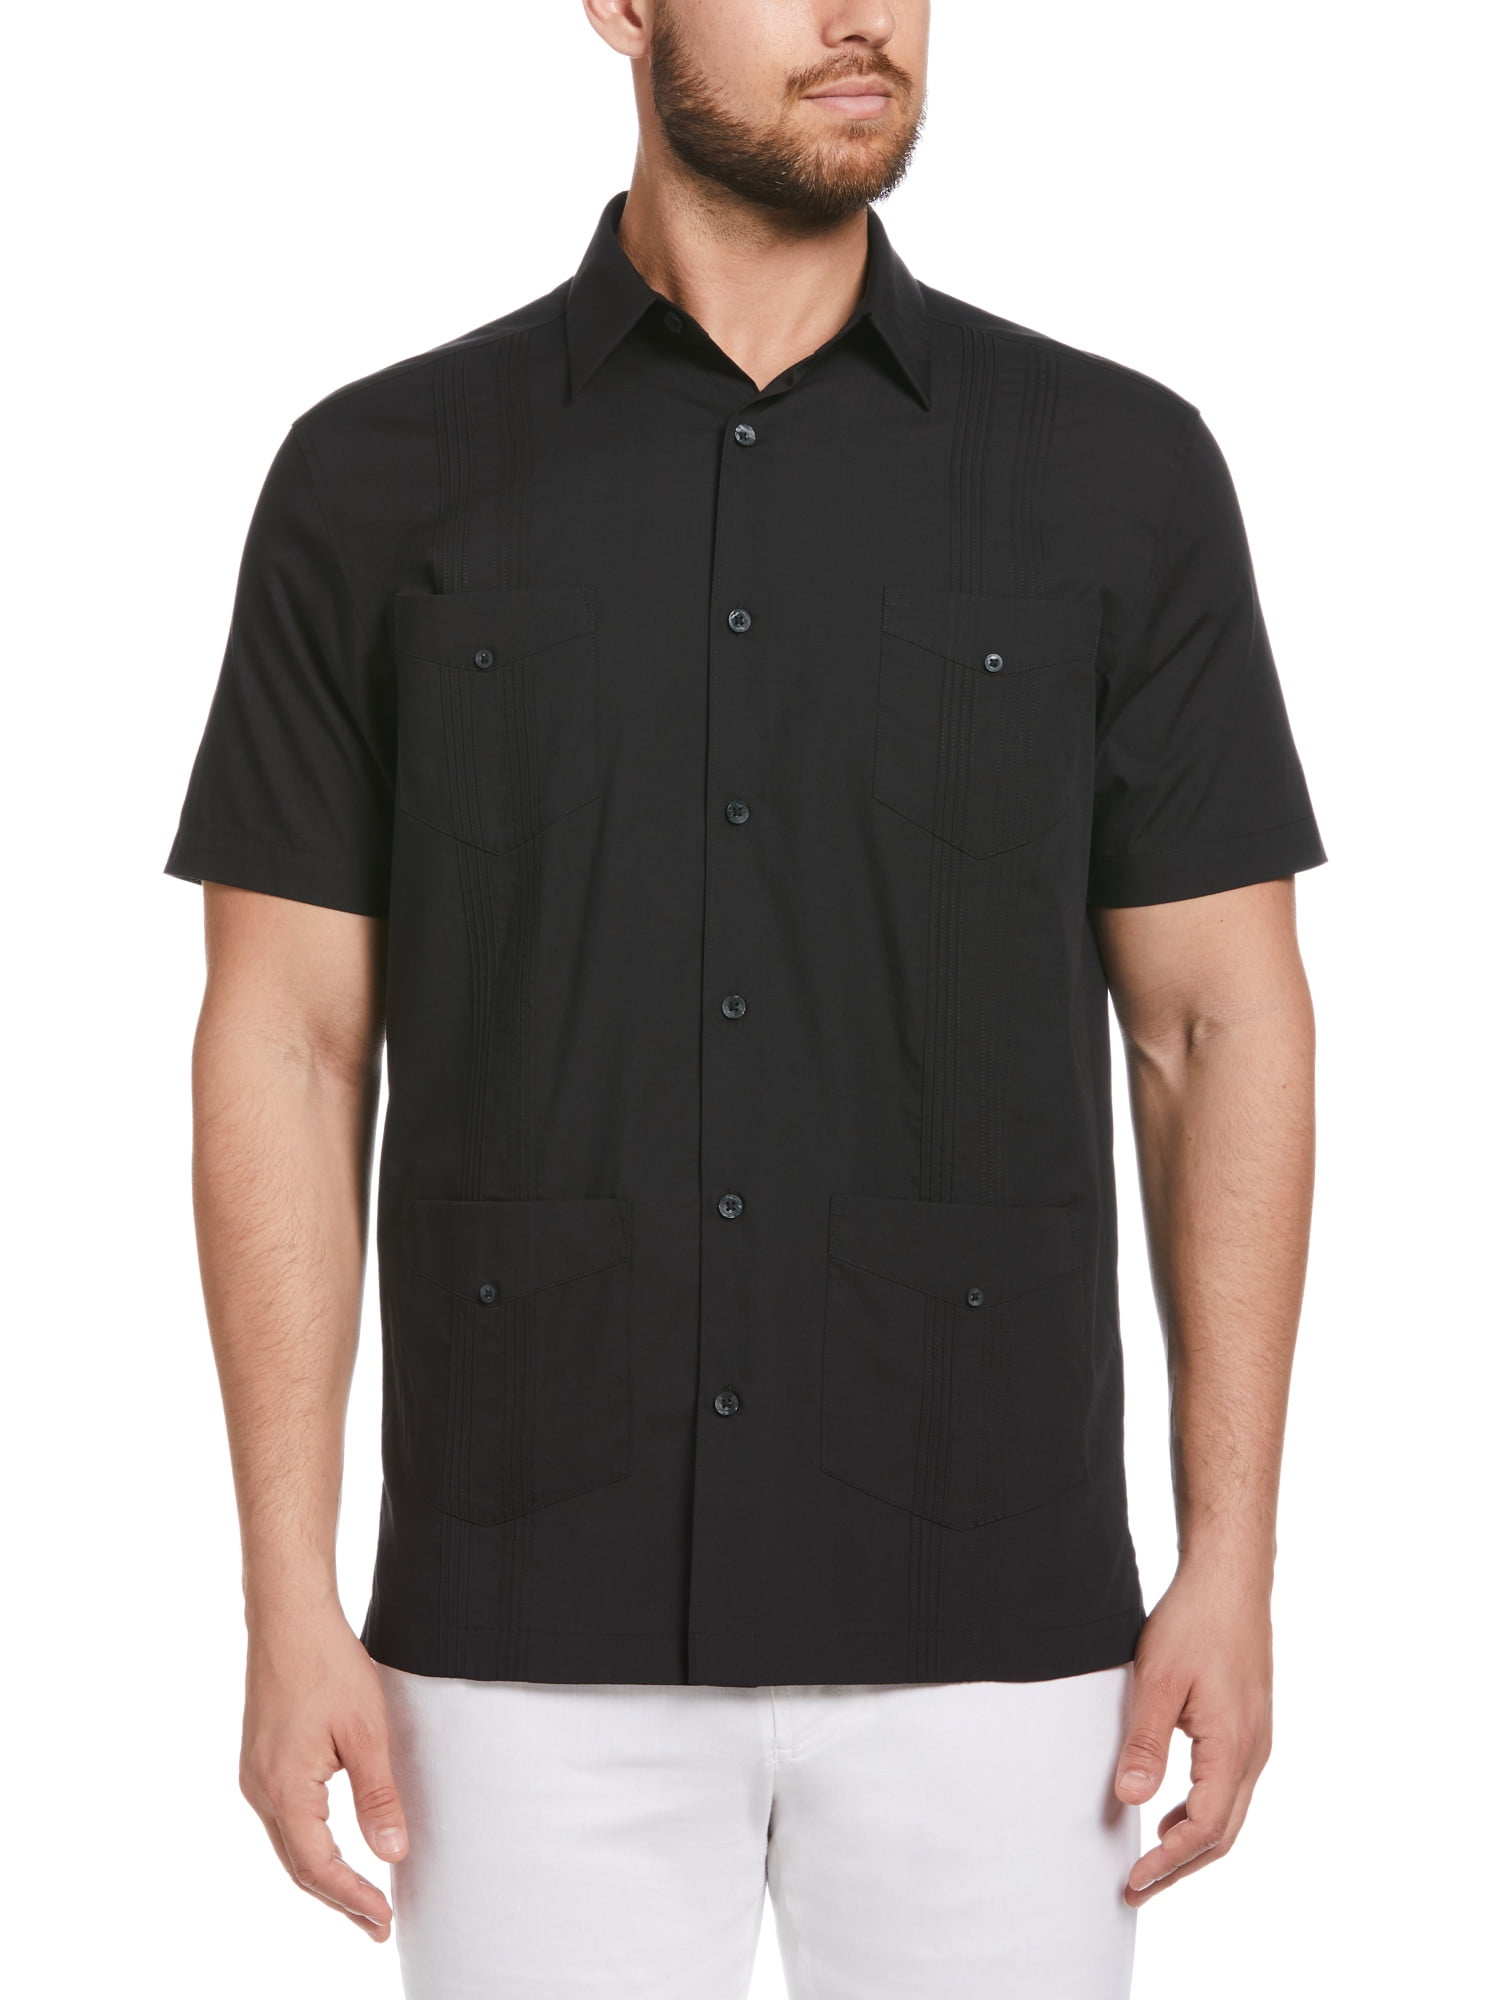 Eddie Bauer Men's Short Sleeve Woven Classic Fit Tech Shirt (Bright White,  XXL) 